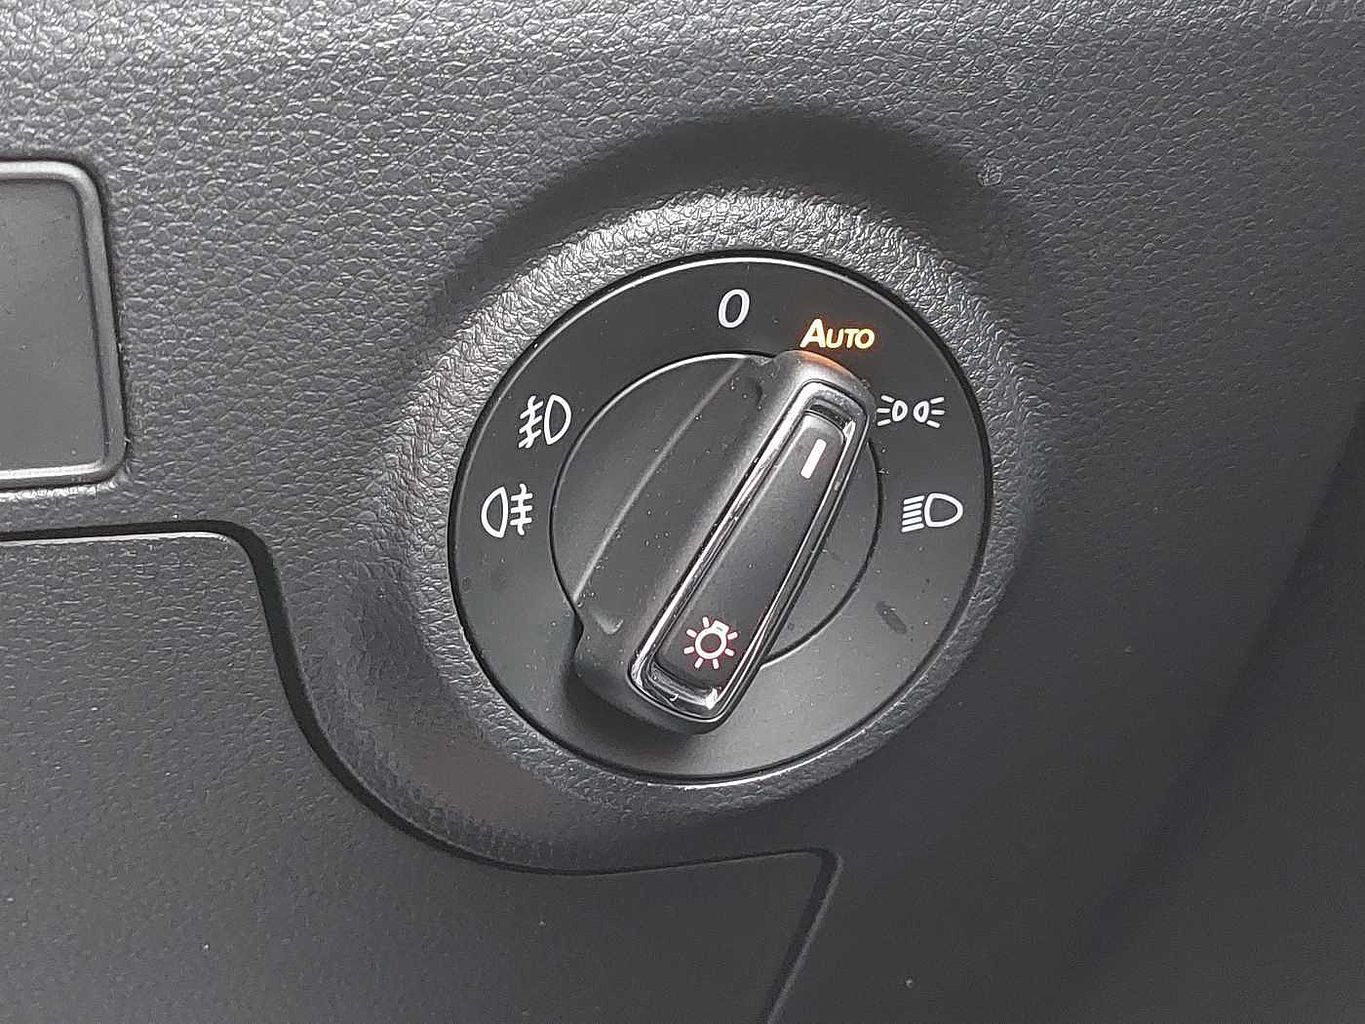 SEAT Ibiza 1.0 MPI (80ps) FR Sport 5-Door